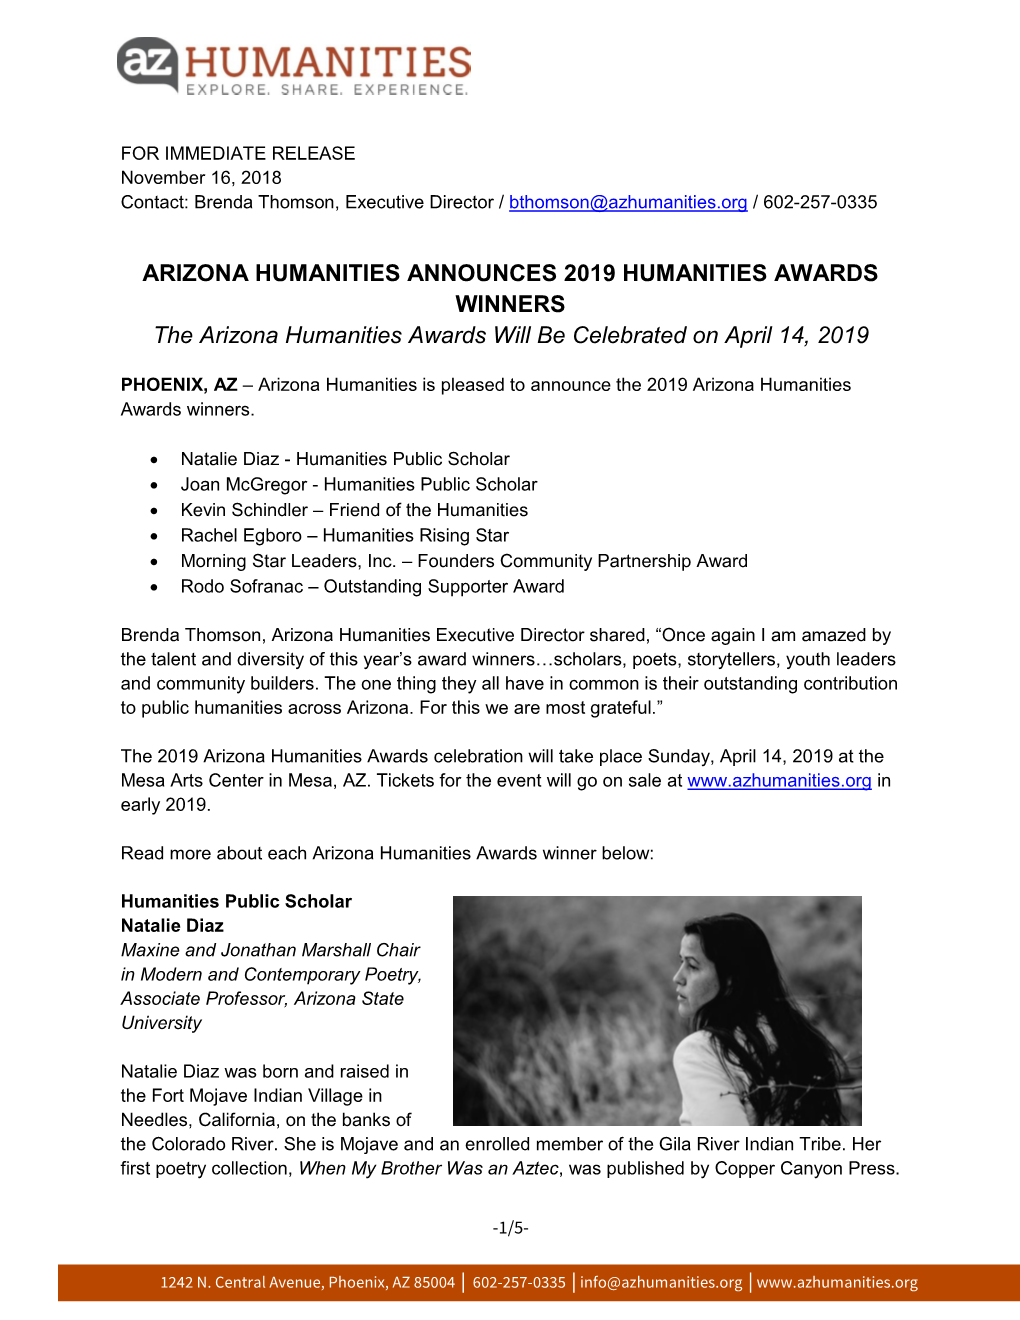 Announcing the 2019 Arizona Humanities Awards Winners